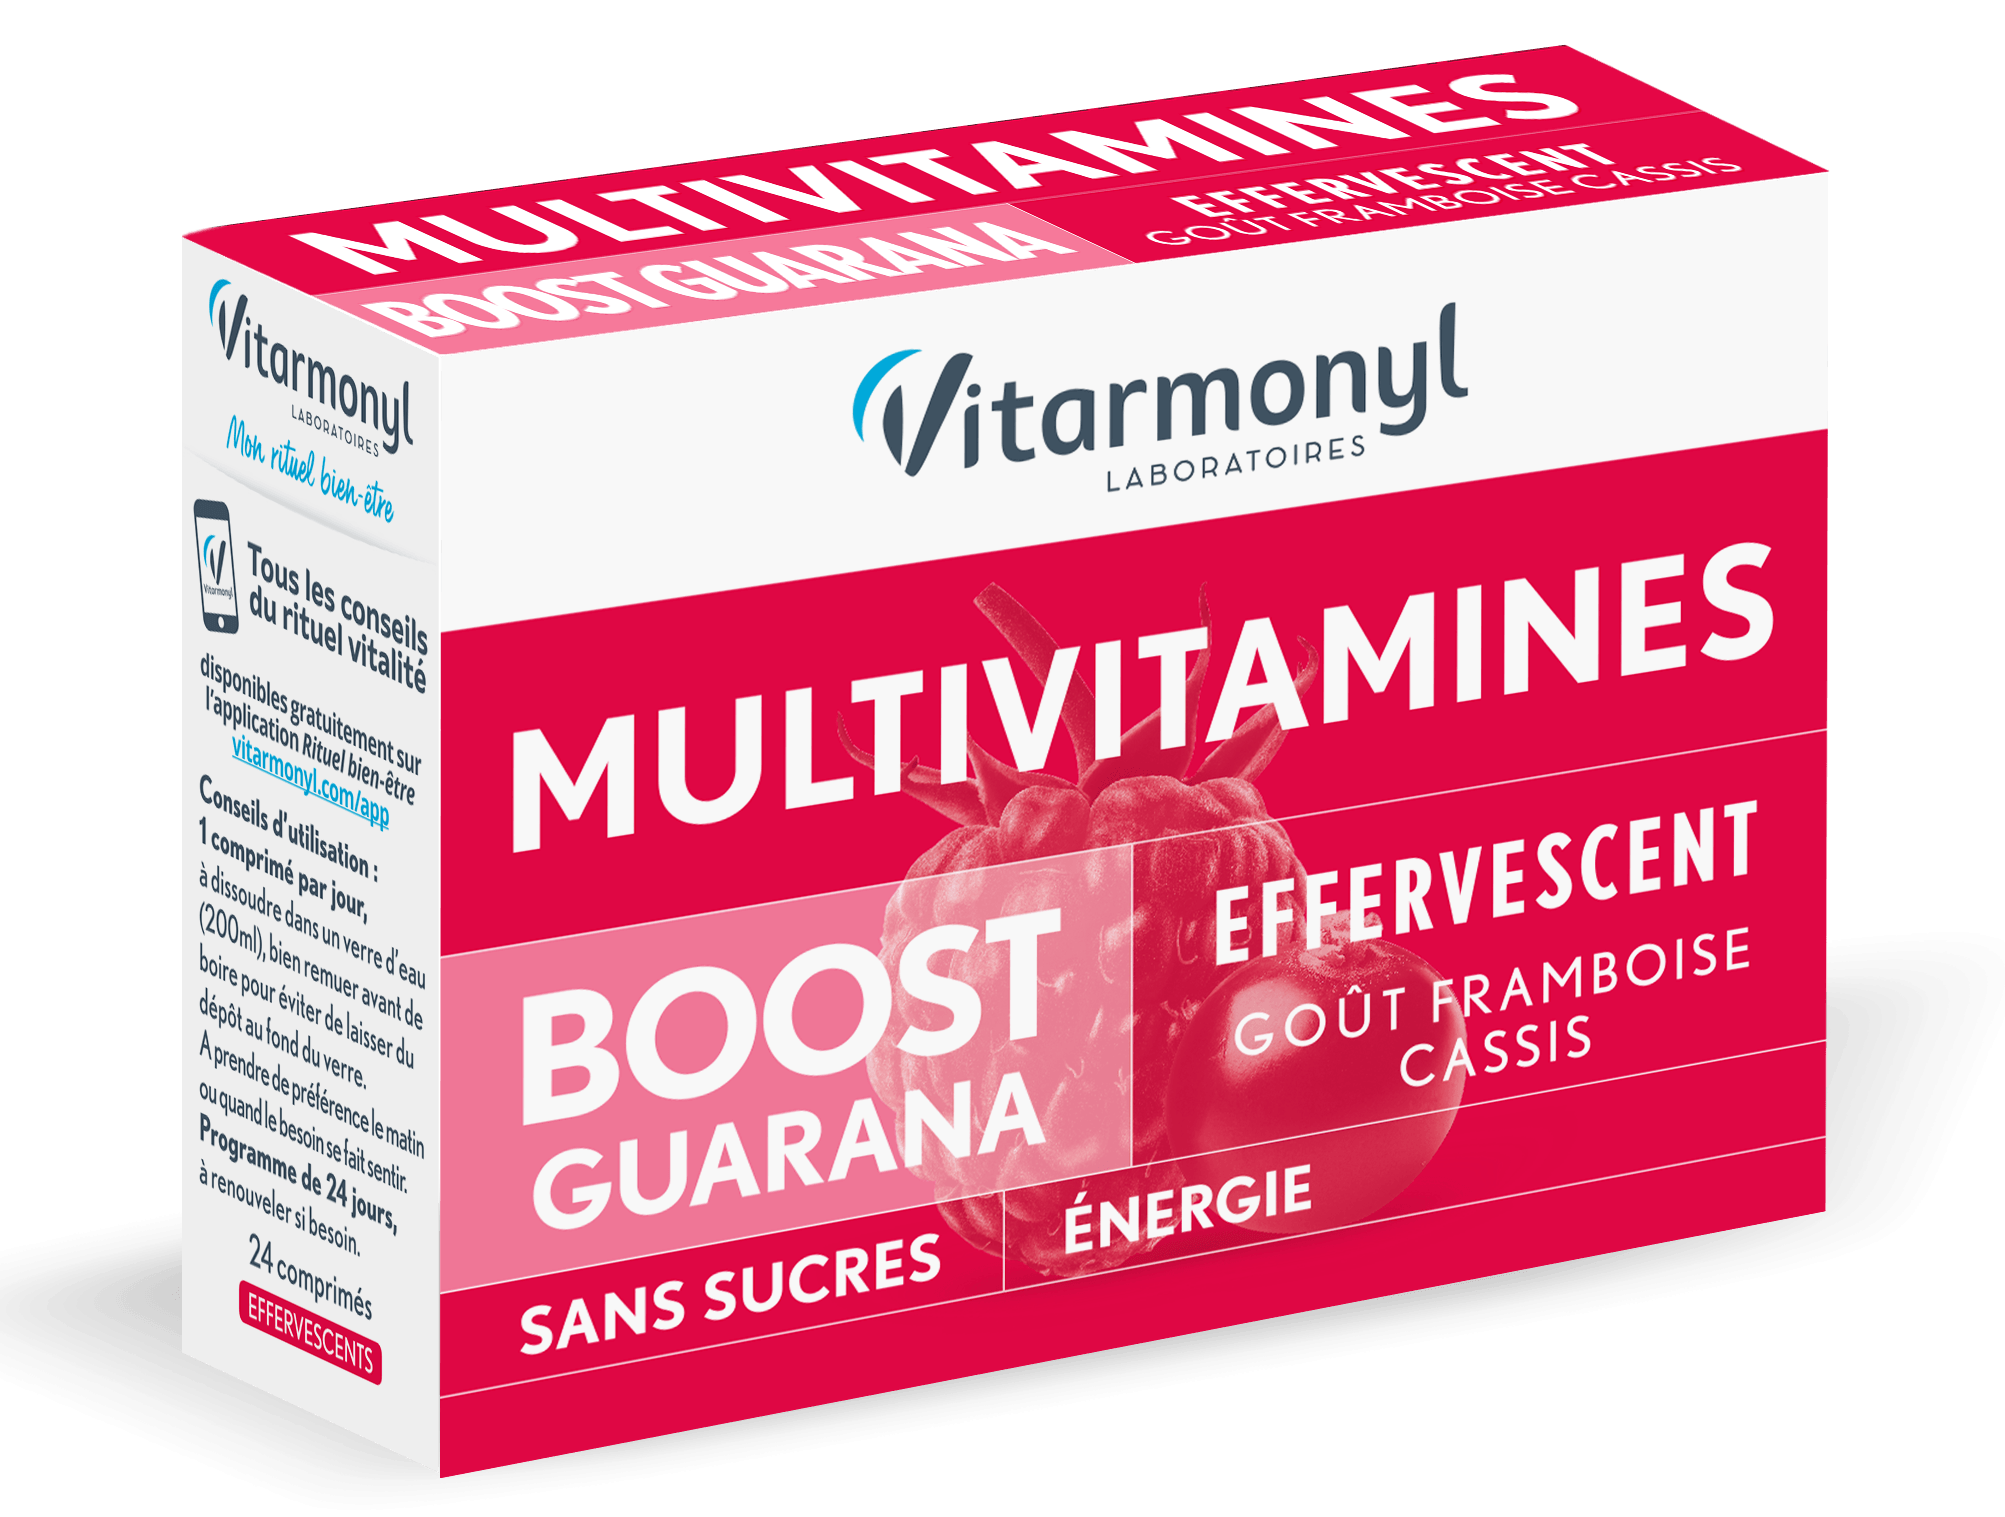 Multivitamines BOOST GUARANA